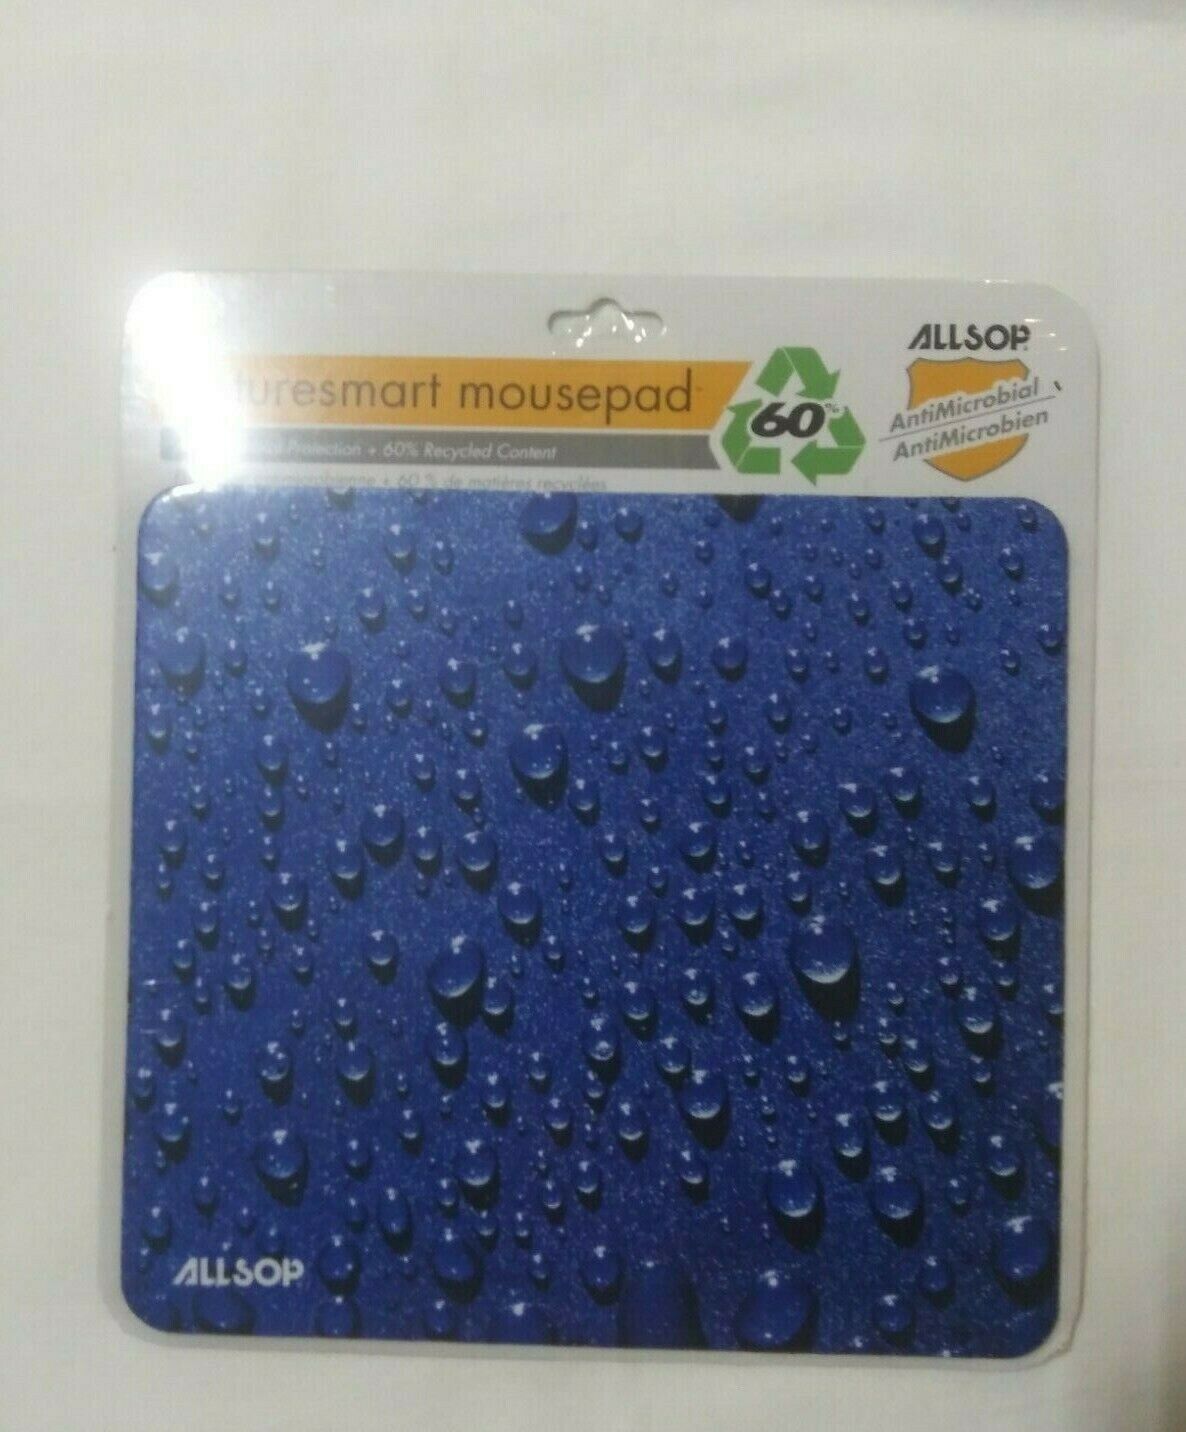 Allsop Naturesmart Antimicrobial 60% Recycled Raindrop Water Blue Mousepad